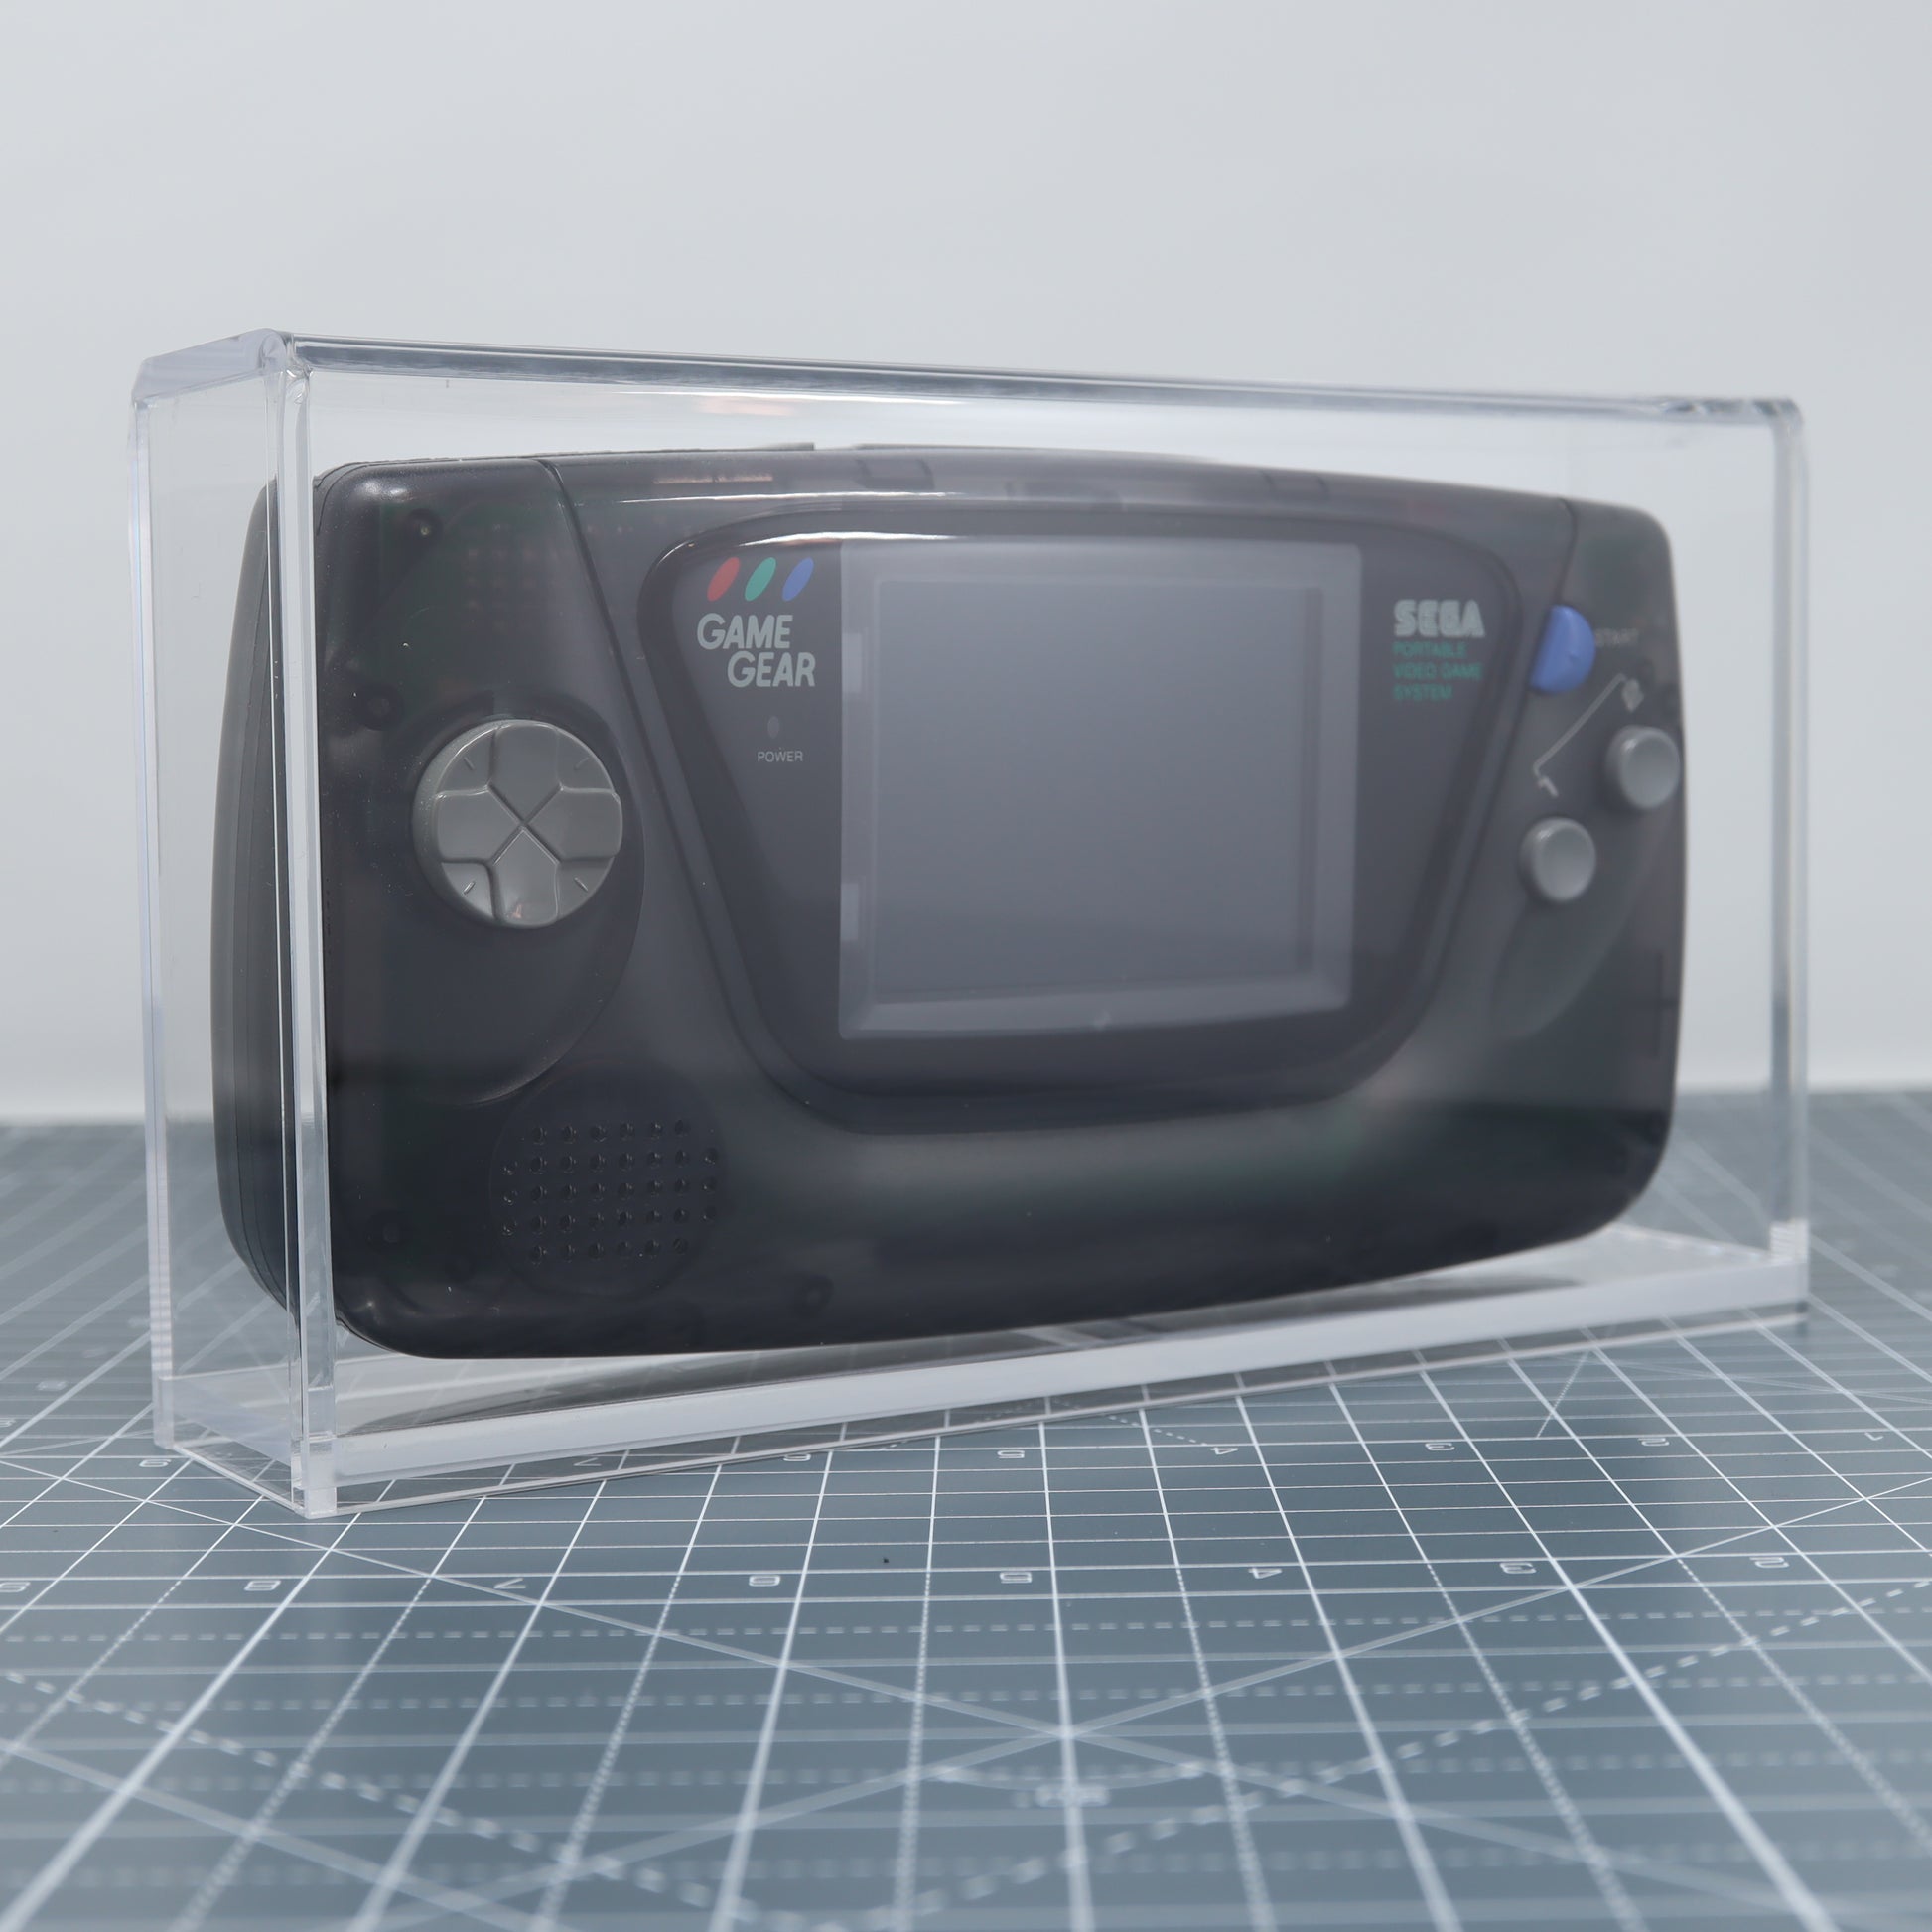 Sega Game Gear Smoke Black edition console on display in custom acrylic display capsule front